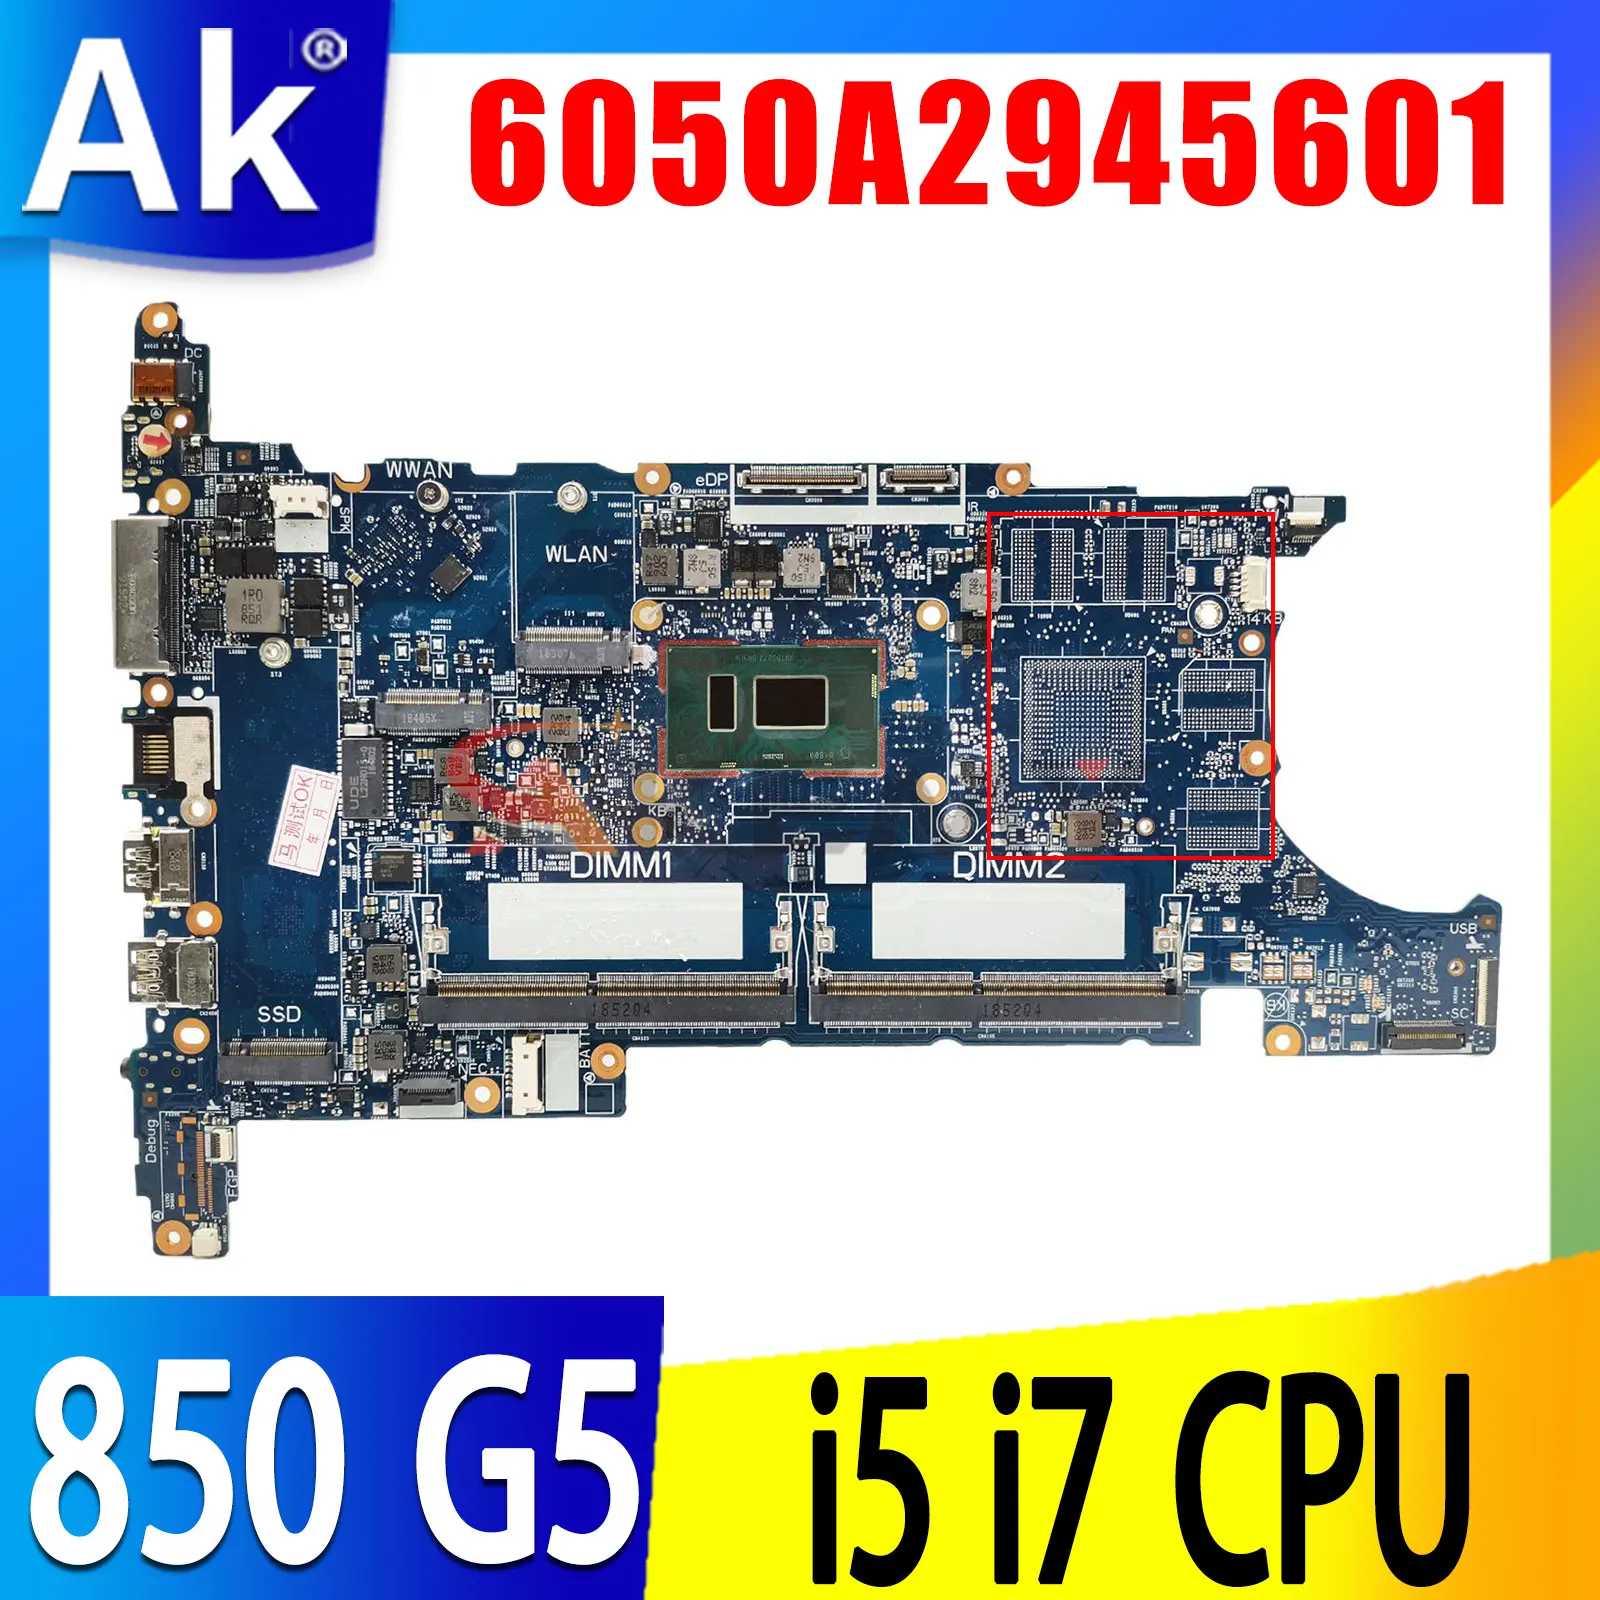 

For HP Elitebook 840 G5 850 G5 14U G5 15U G5 Laptop Motherboard 6050A2945601 W/ i5 i7 CPU 100% testing ok